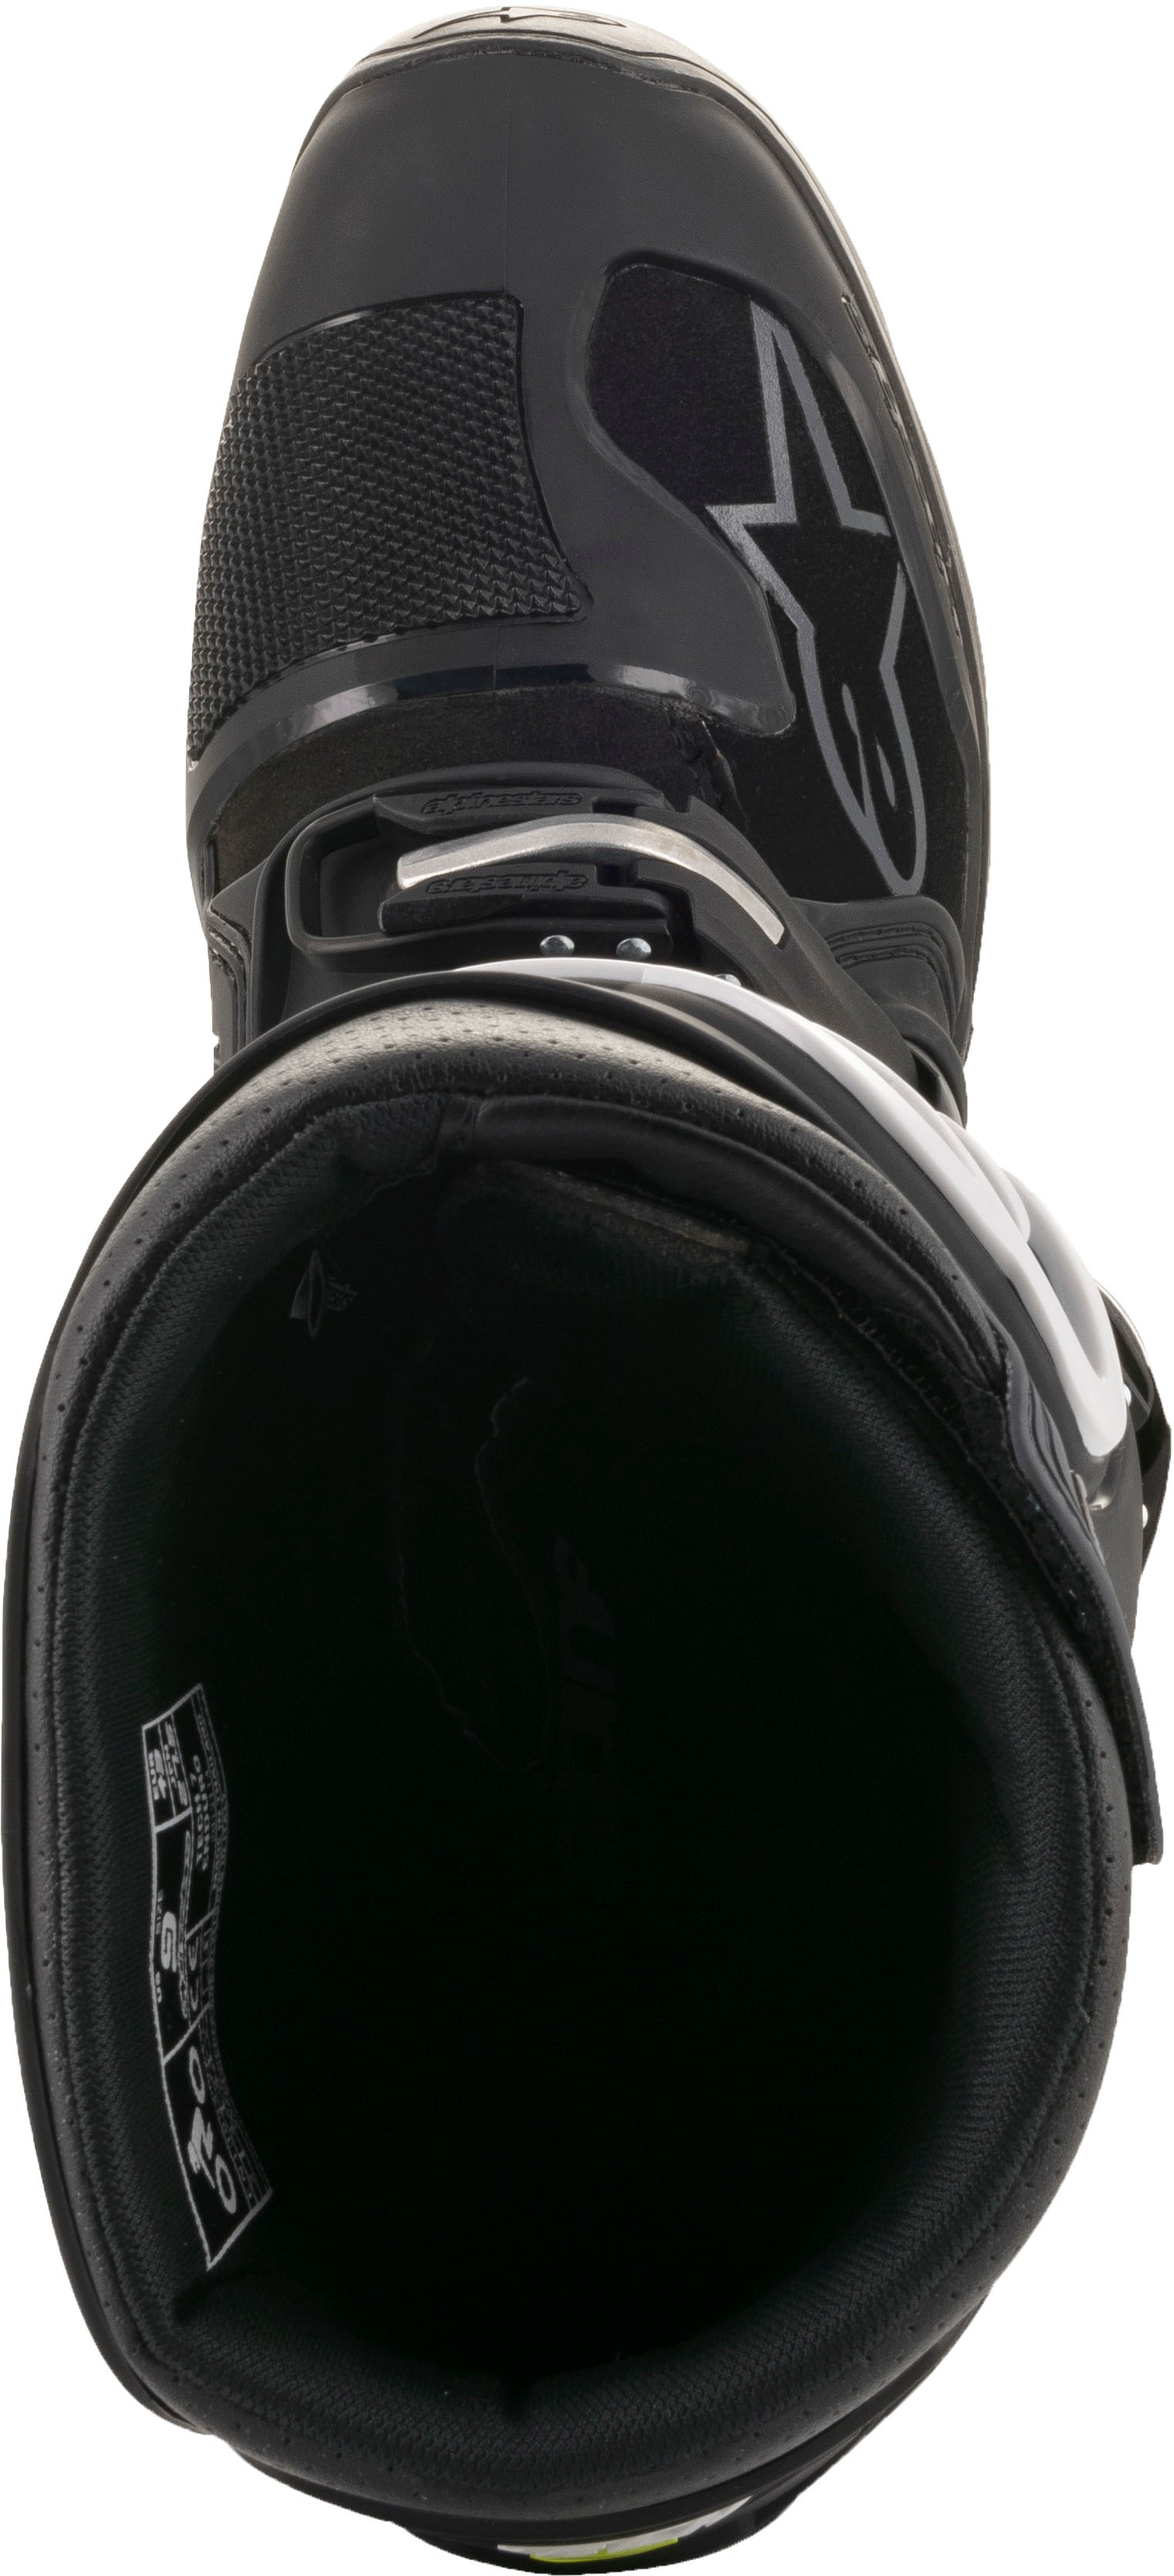 Tech 7 Enduro Drystar Boots Black/Grey US 09 - Click Image to Close